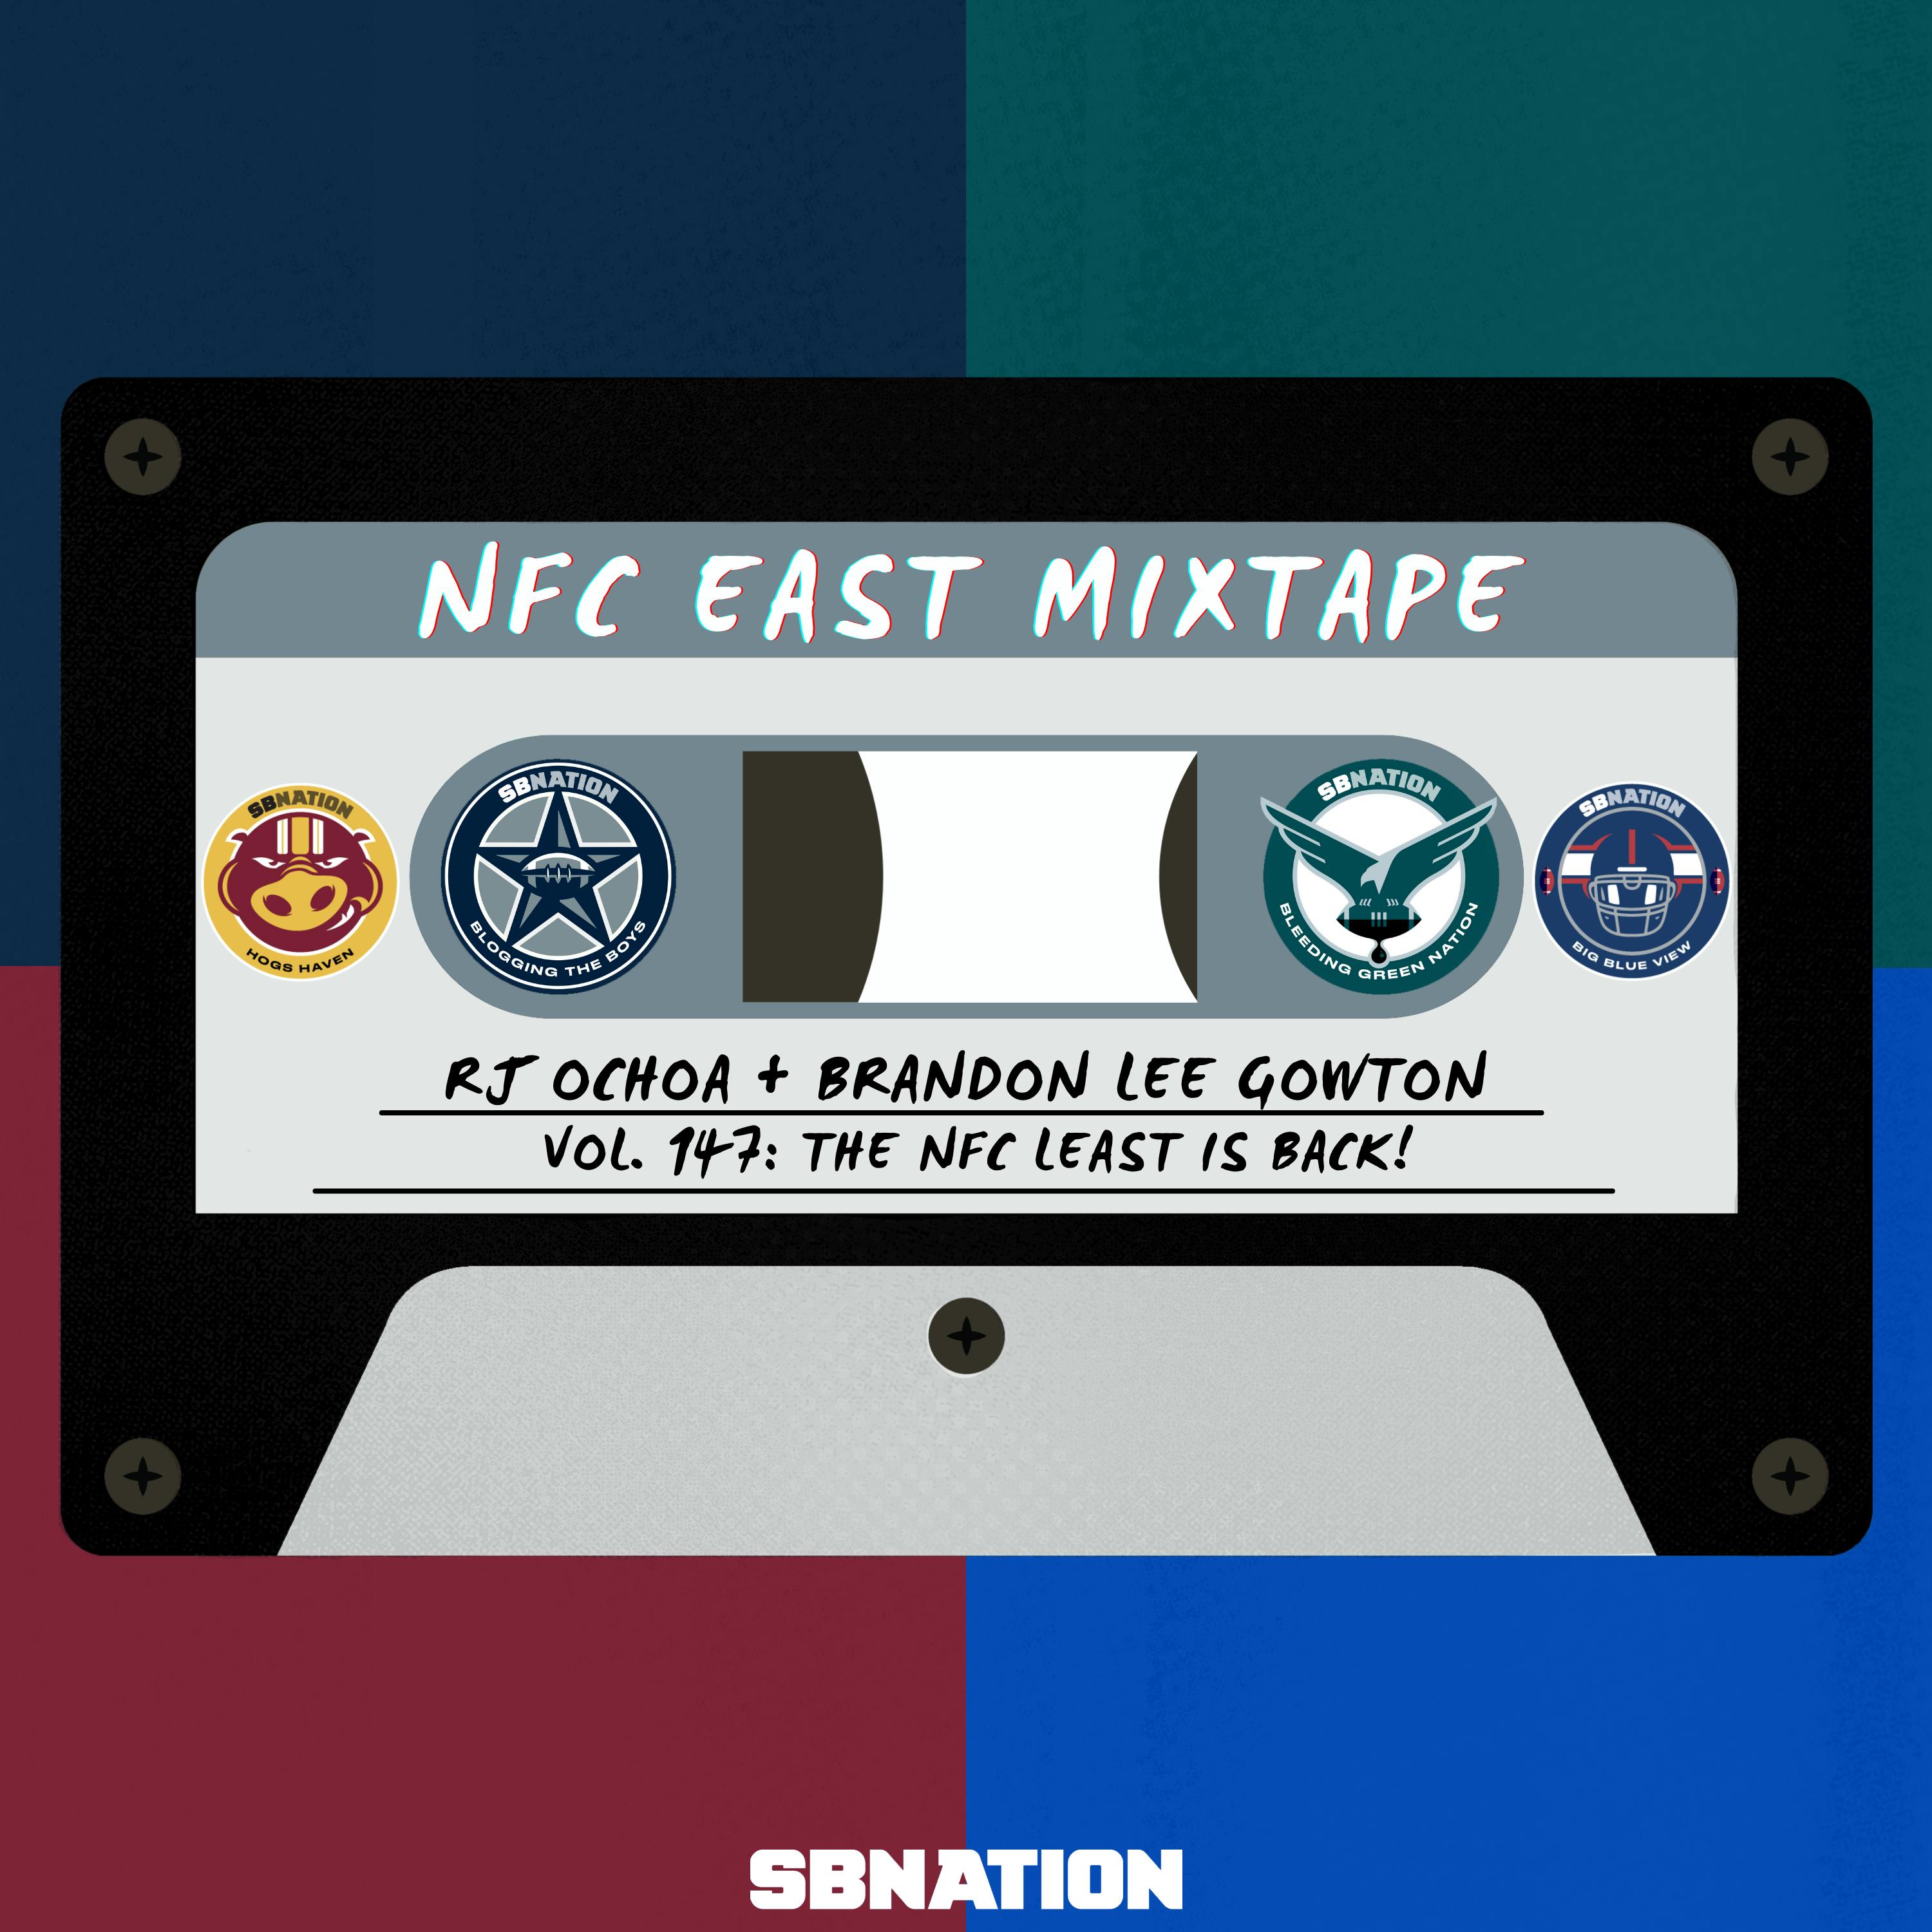 NFC East Mixtape Vol. 147: The NFC Least is back!